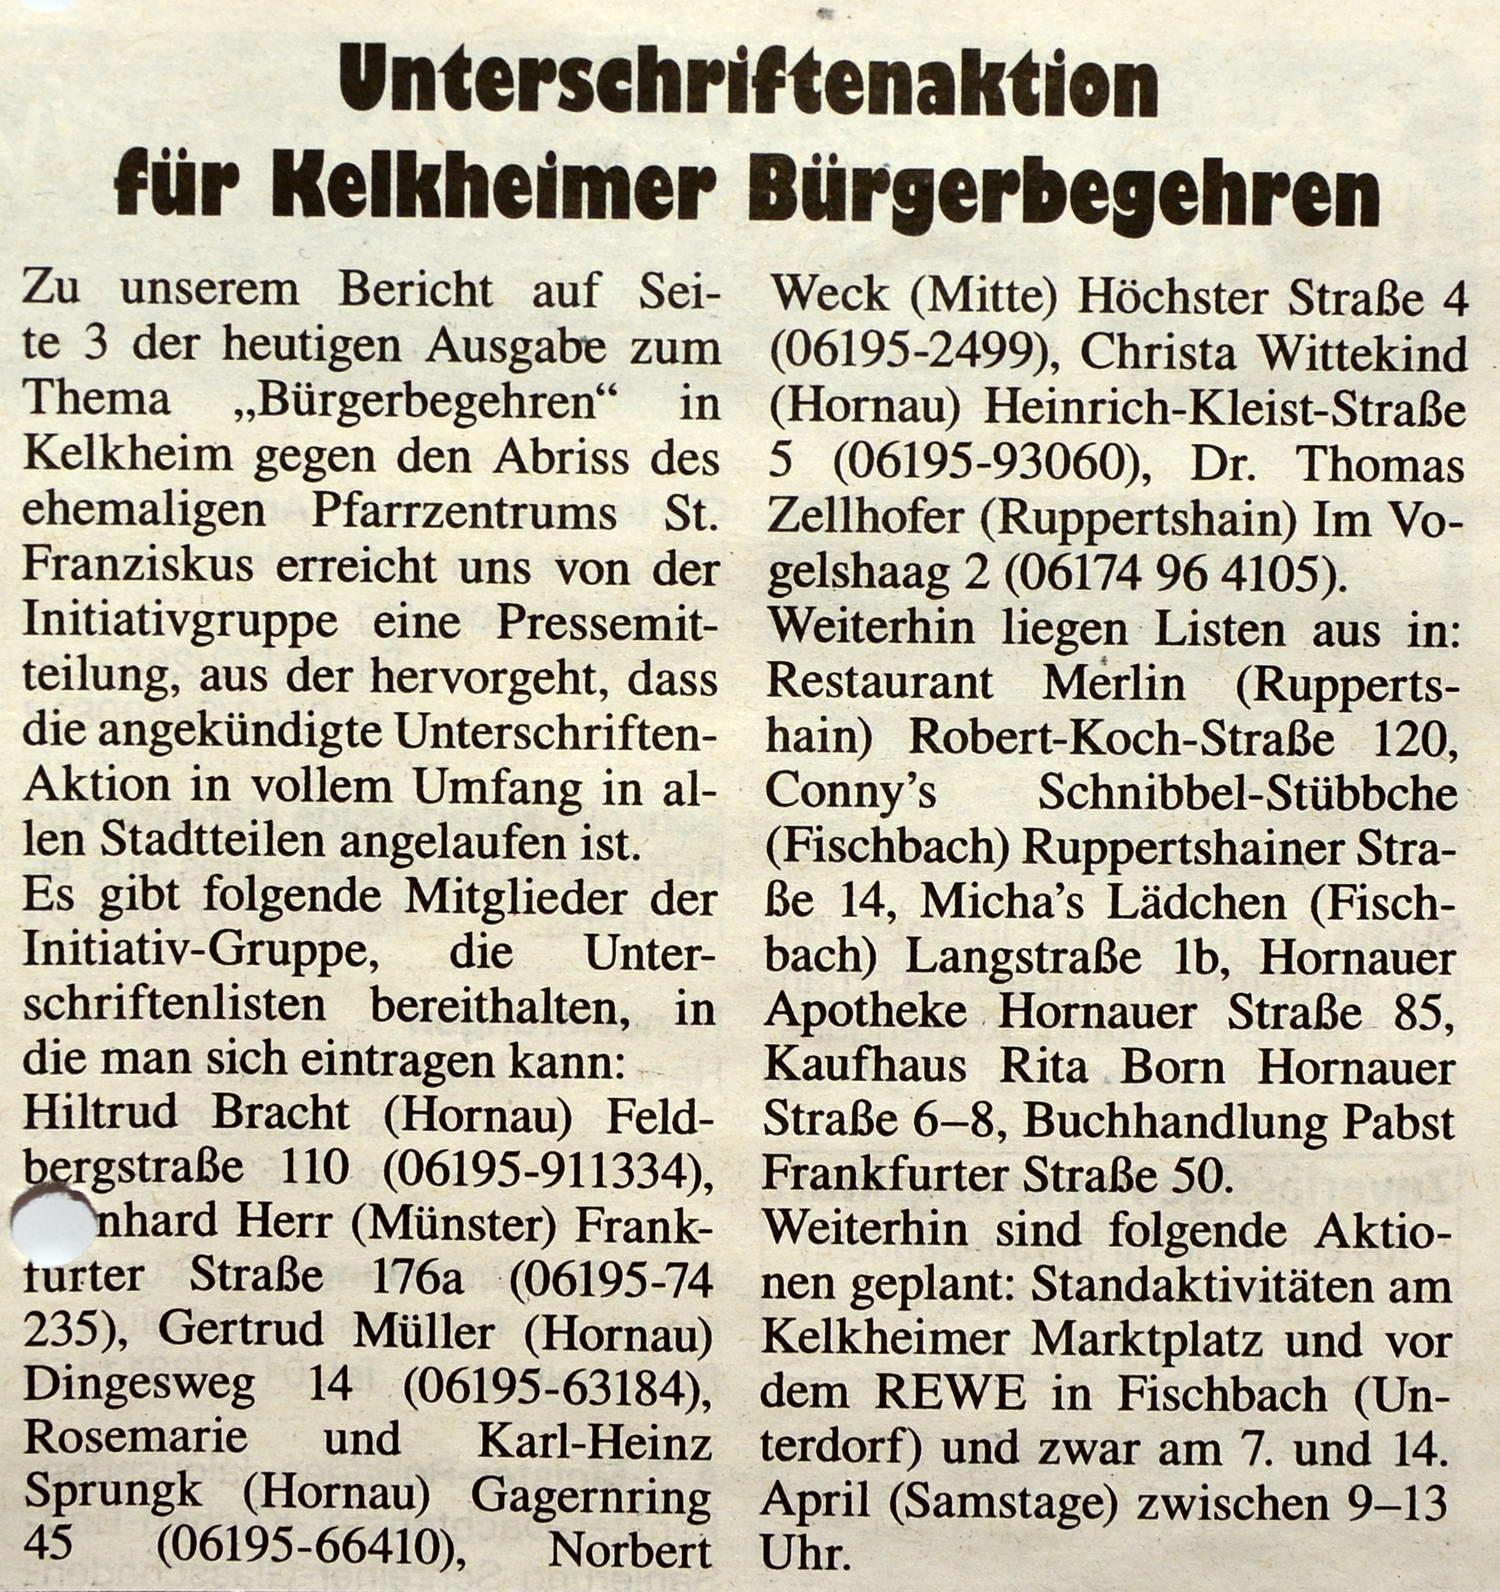 2018.03.29 KeZ Unterschriftenaktion für Kelkheimer Bürgerbegehren